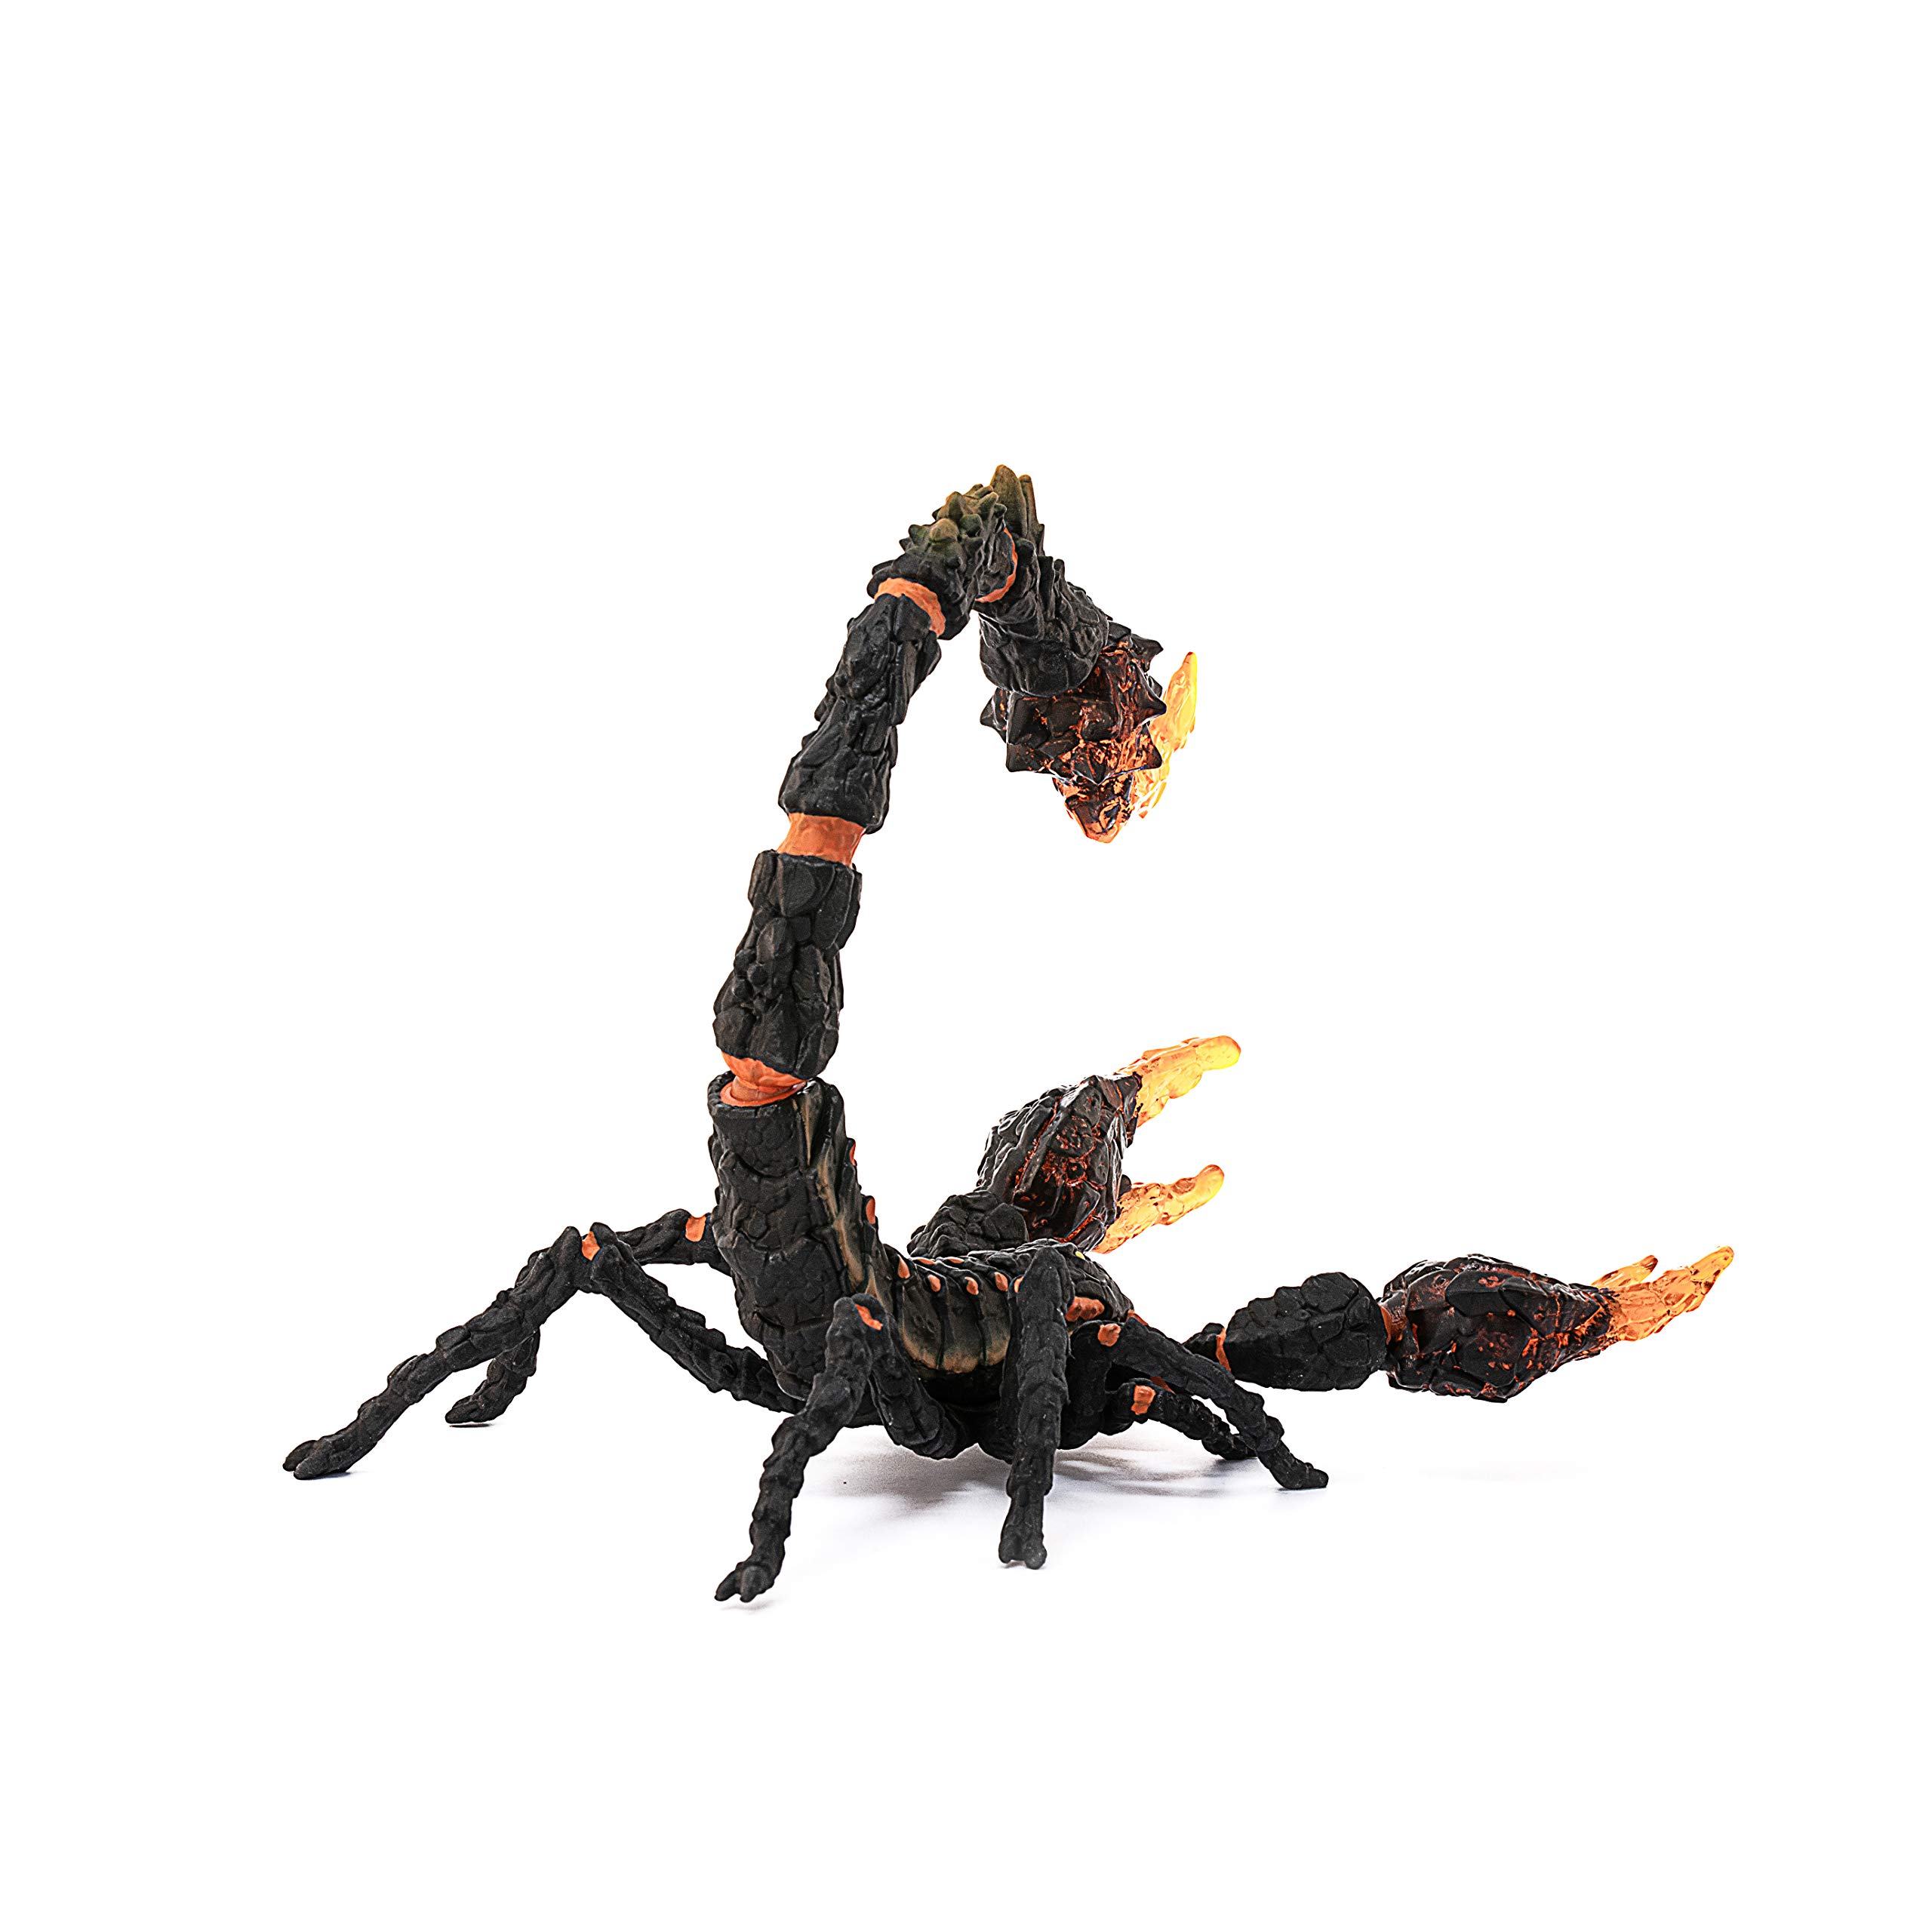 Schleich Eldrador Creatures Lava Scorpion Action Figure Toy for Kids Ages 7-12 Multicoloured, 20.5 x 13.5 x 14 cm